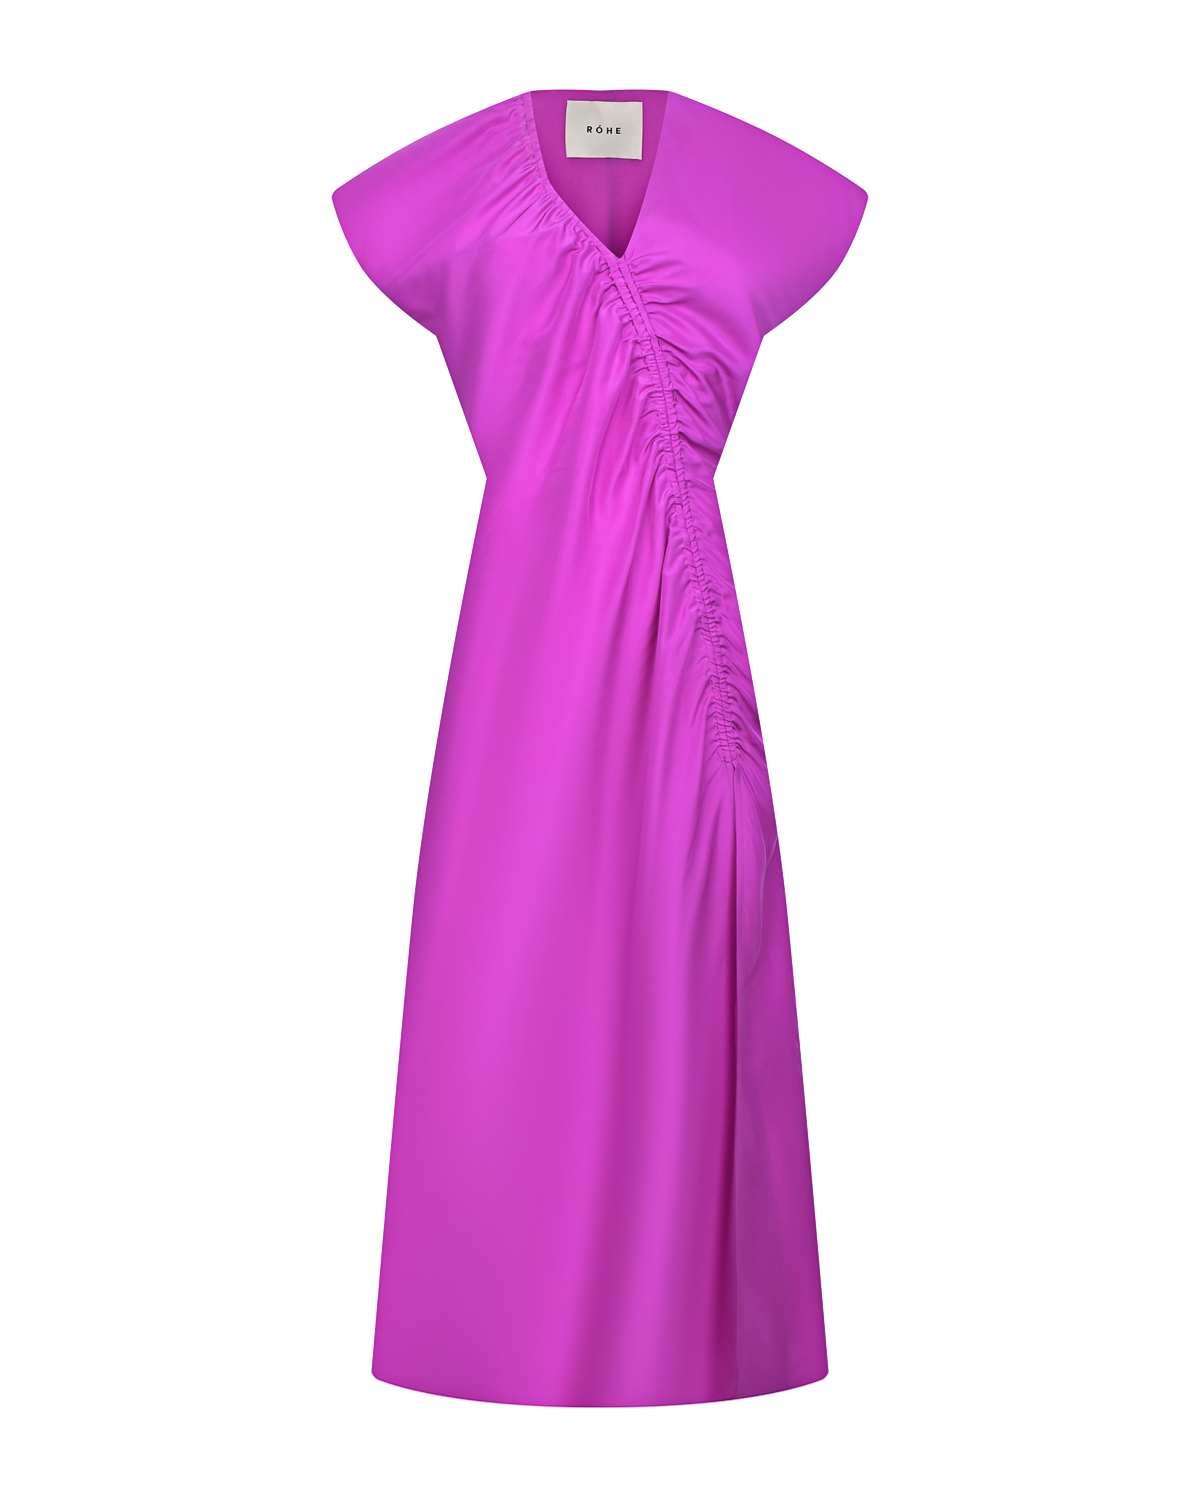 Шелковое платье цвета фуксии ROHE, размер 42 - фото 1